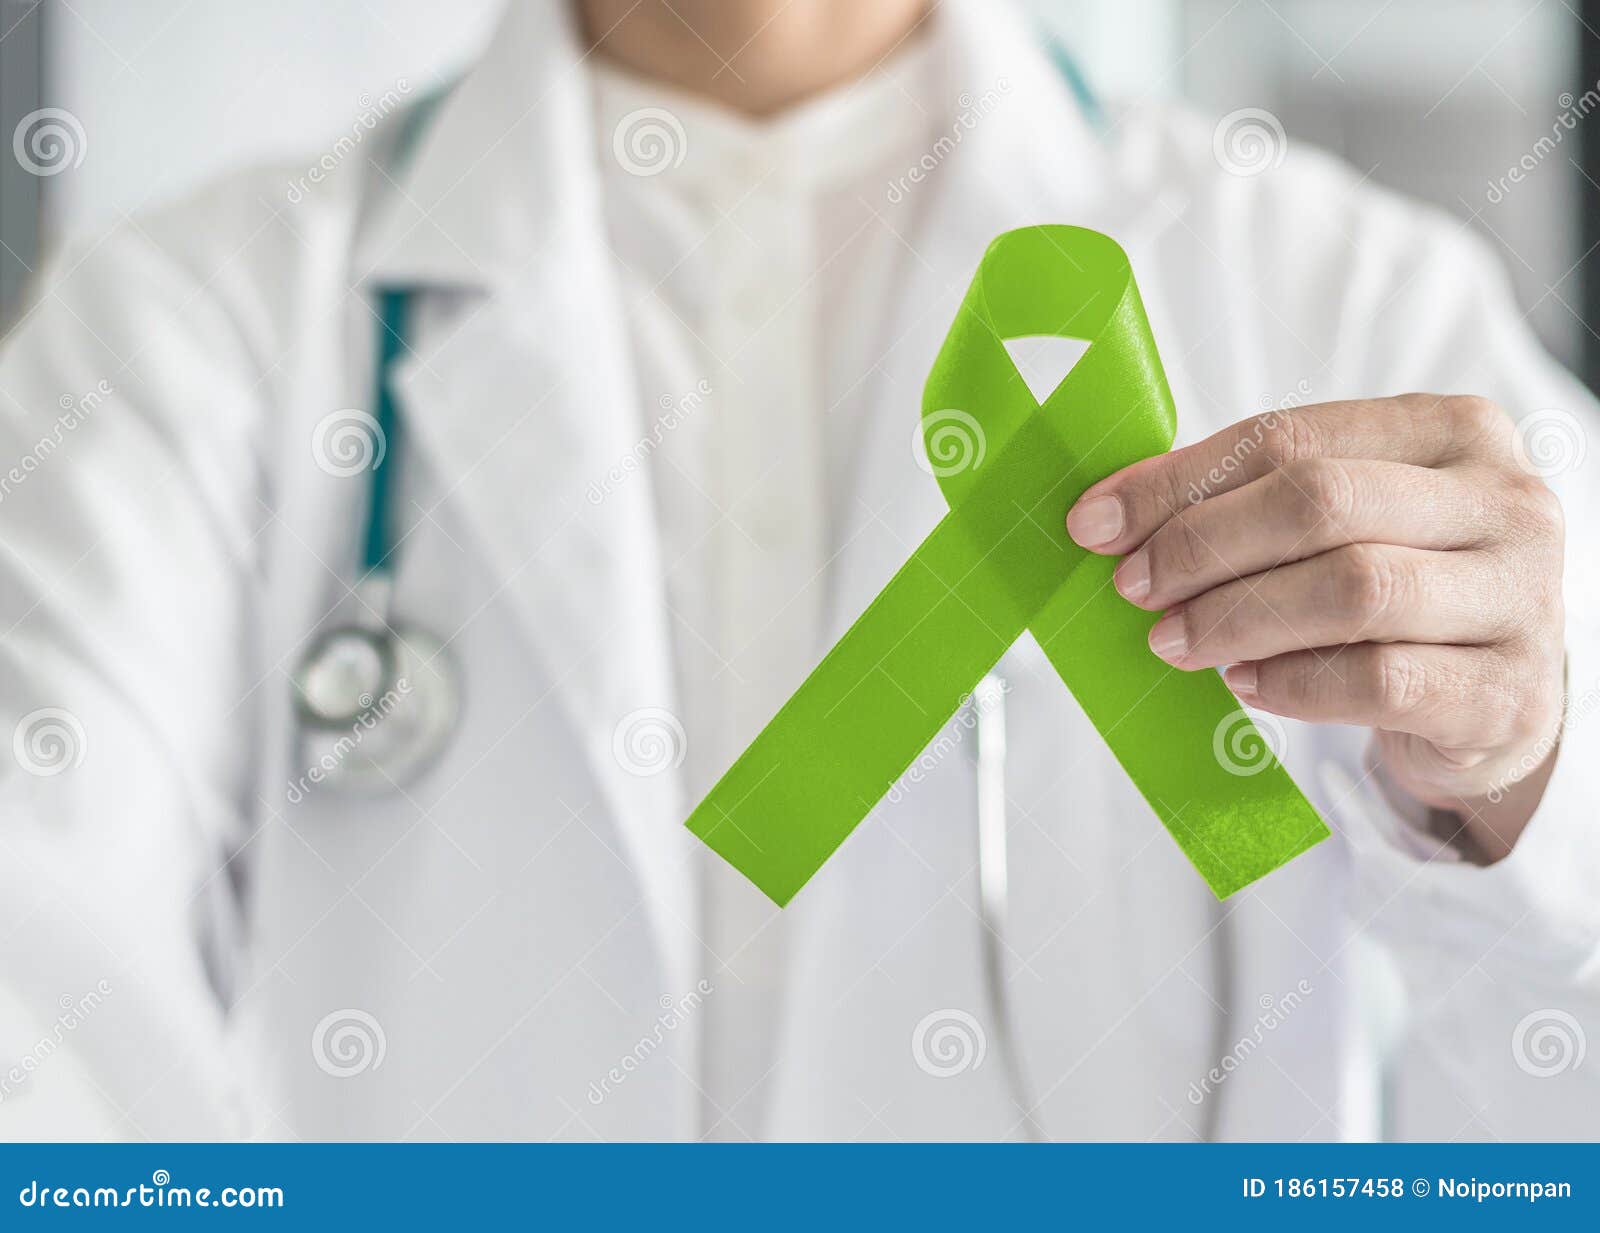 lime green ribbon in doctorÃ¢â¬â¢s hand for lymphoma cancer and mental health awareness, raising support and help patient living